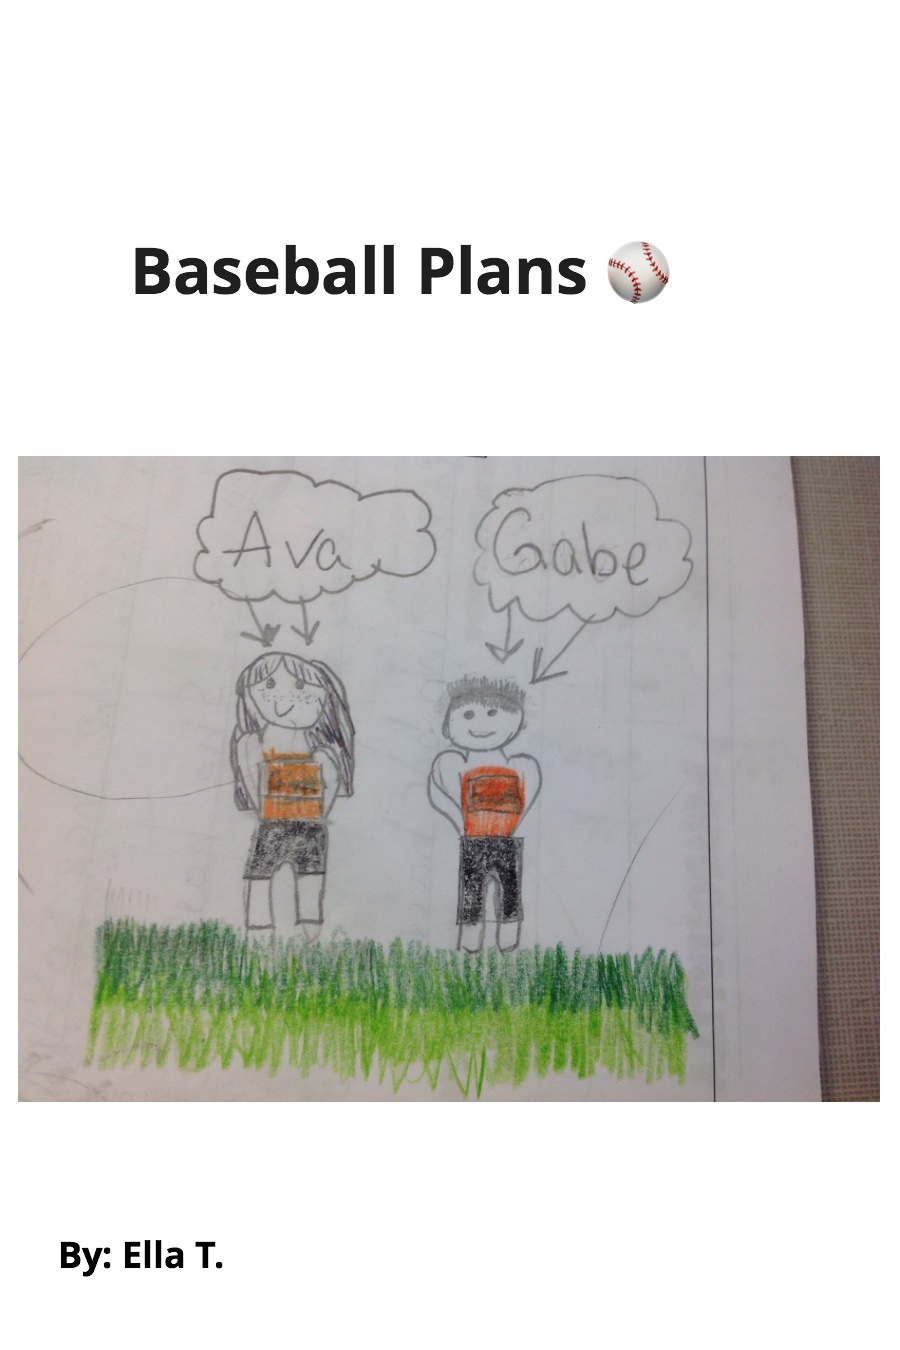 Baseball Plans by Ella T